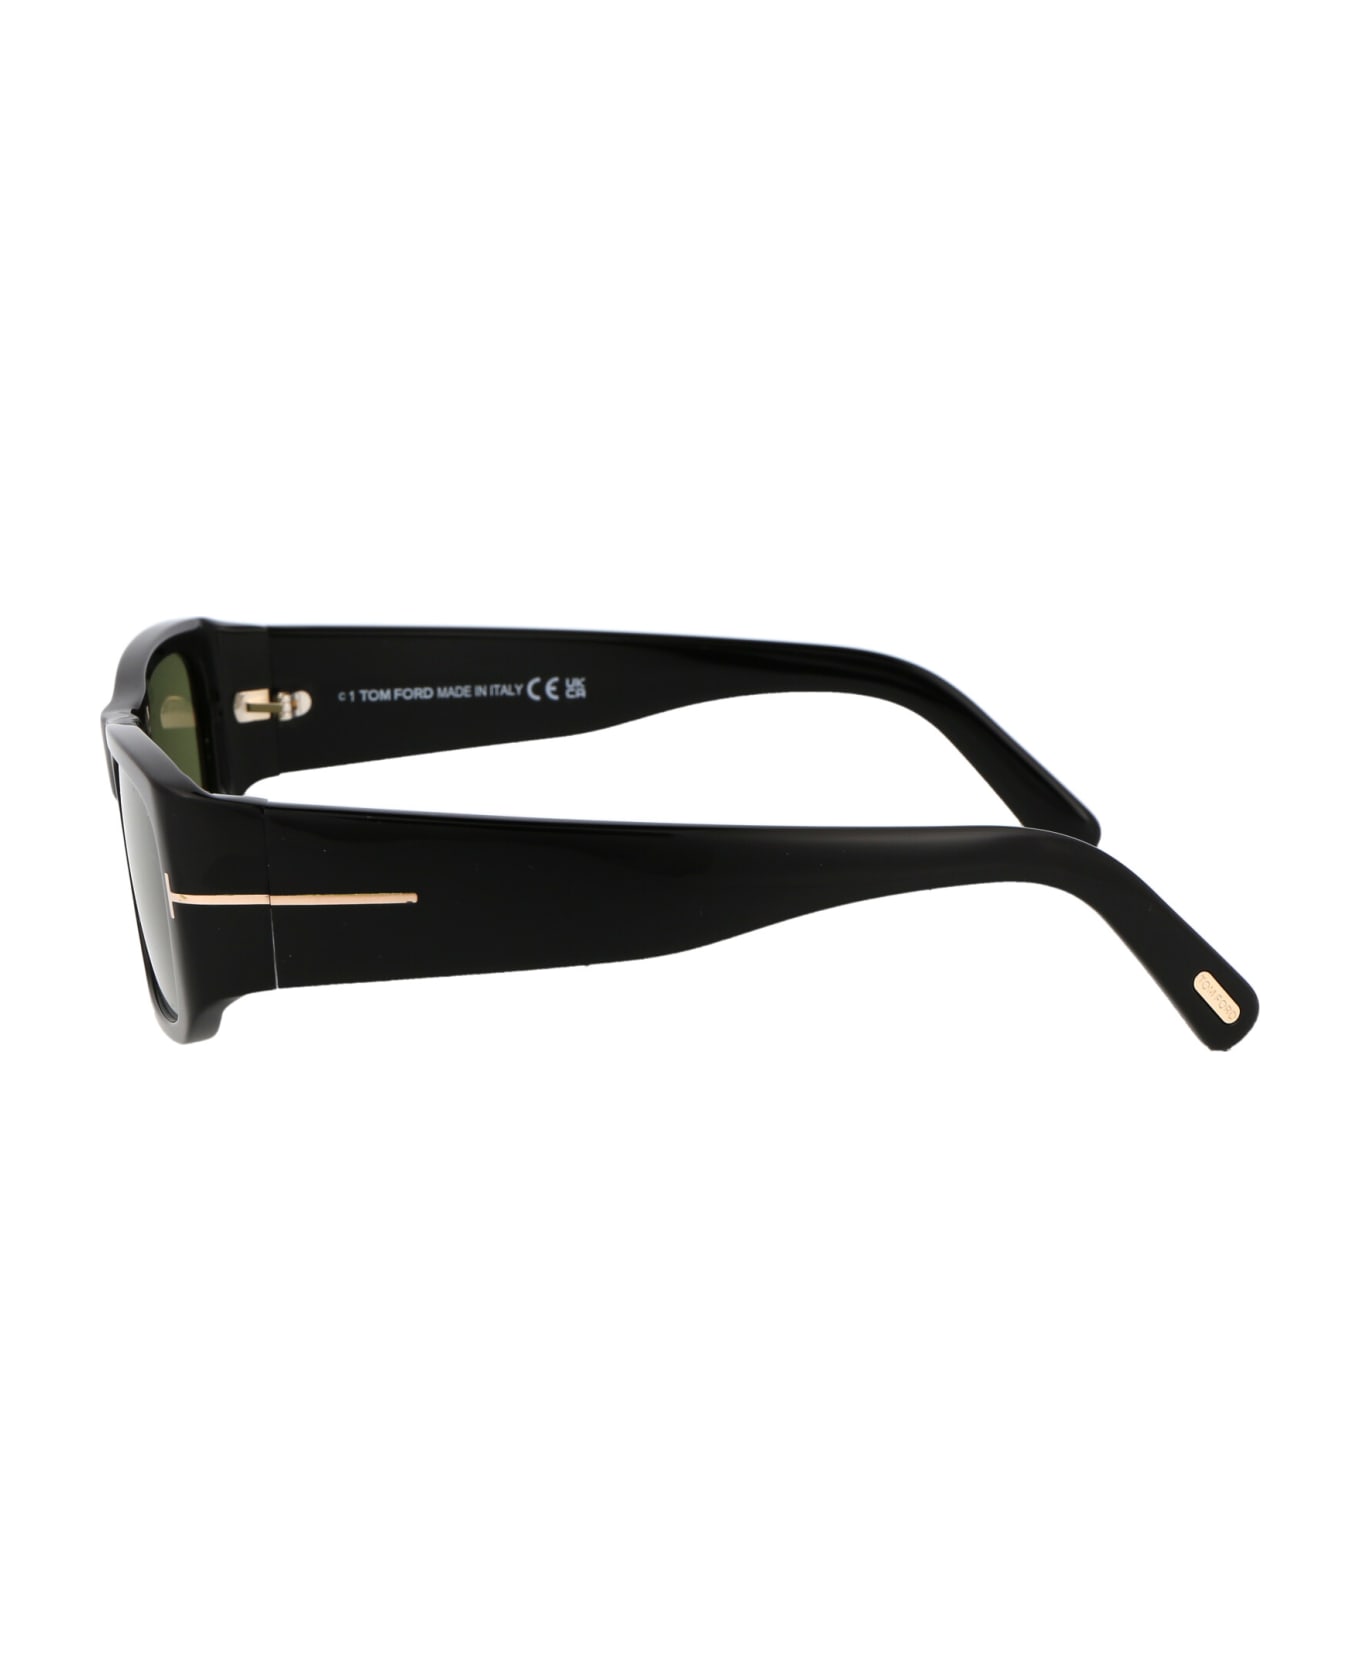 Tom Ford Eyewear Andres-02 Sunglasses - 01N Nero Lucido / Verde